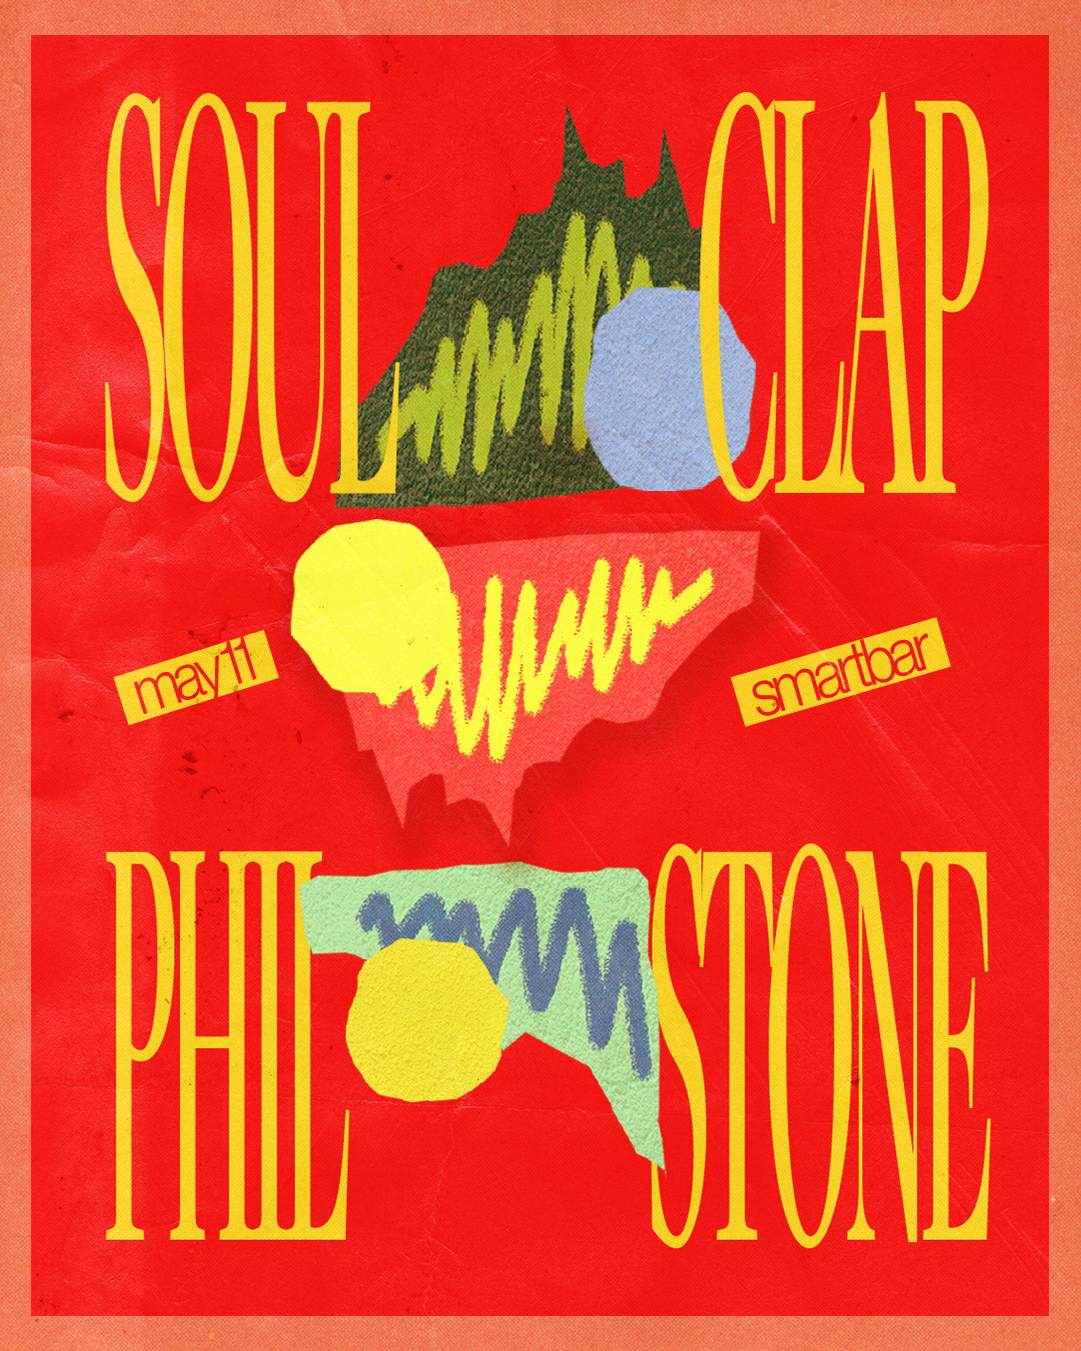 Soul Clap - Phil Stone - Página frontal